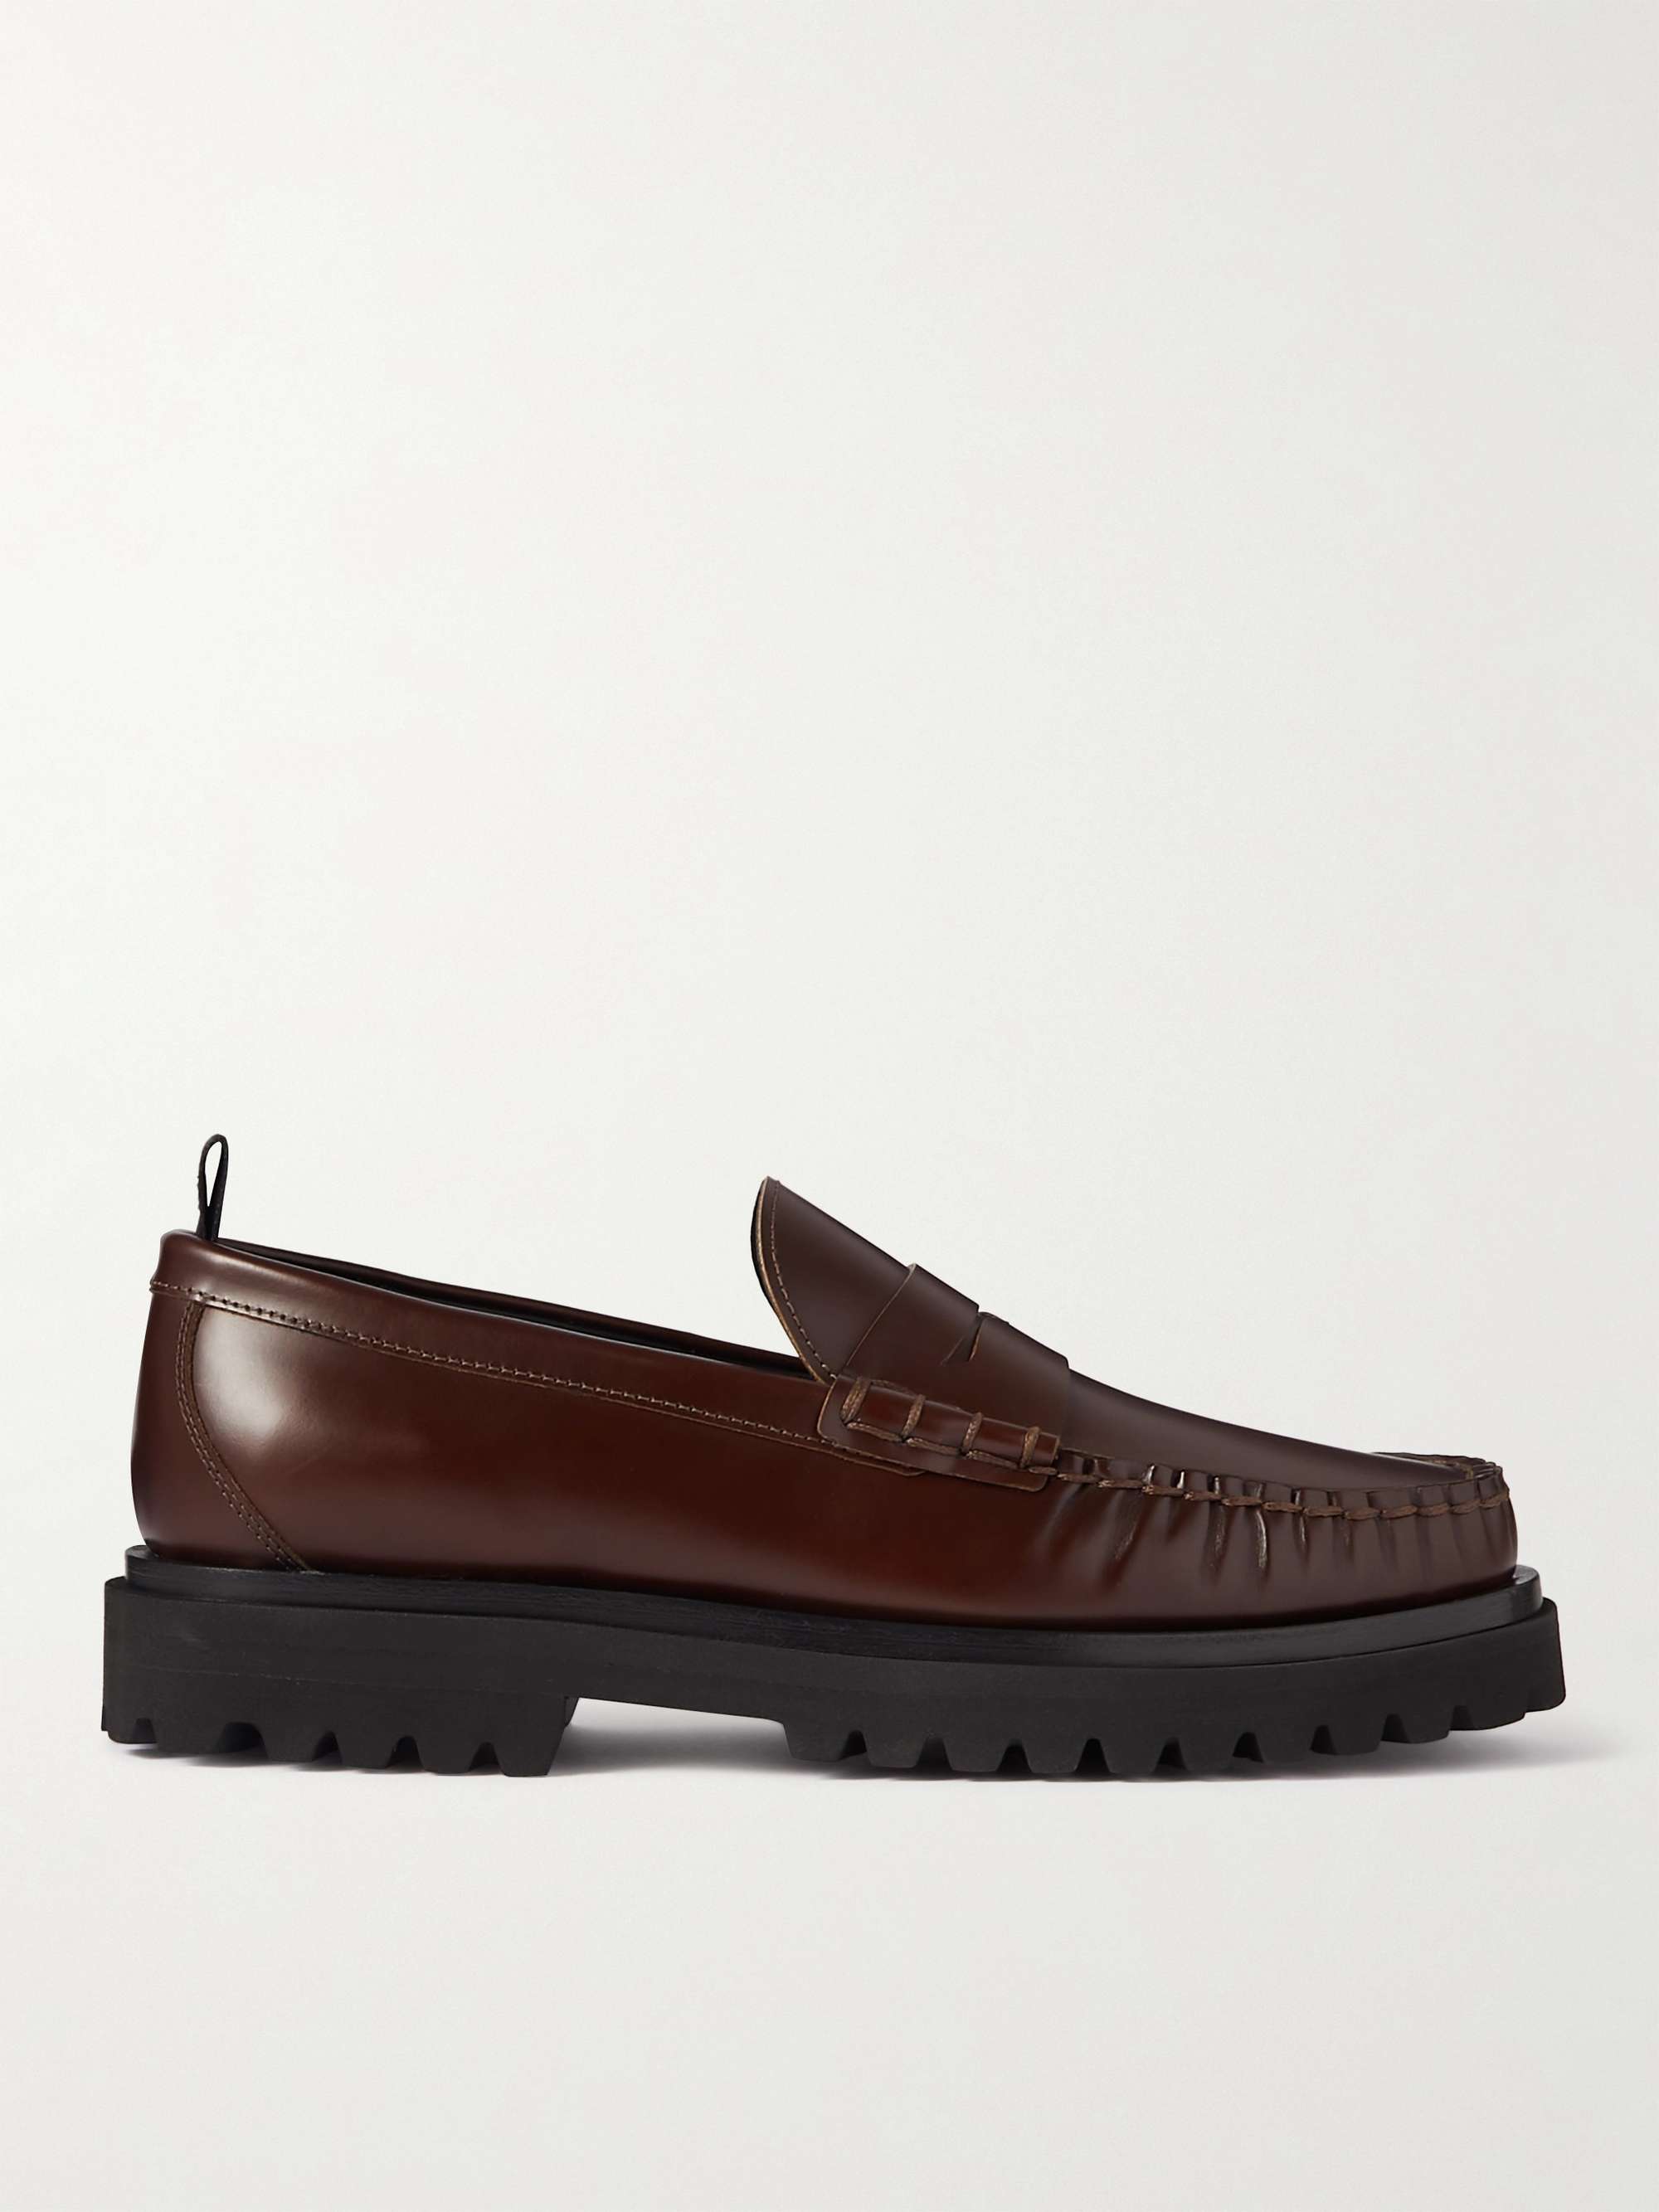 OFFICINE CREATIVE Leather Penny Loafers for Men | MR PORTER